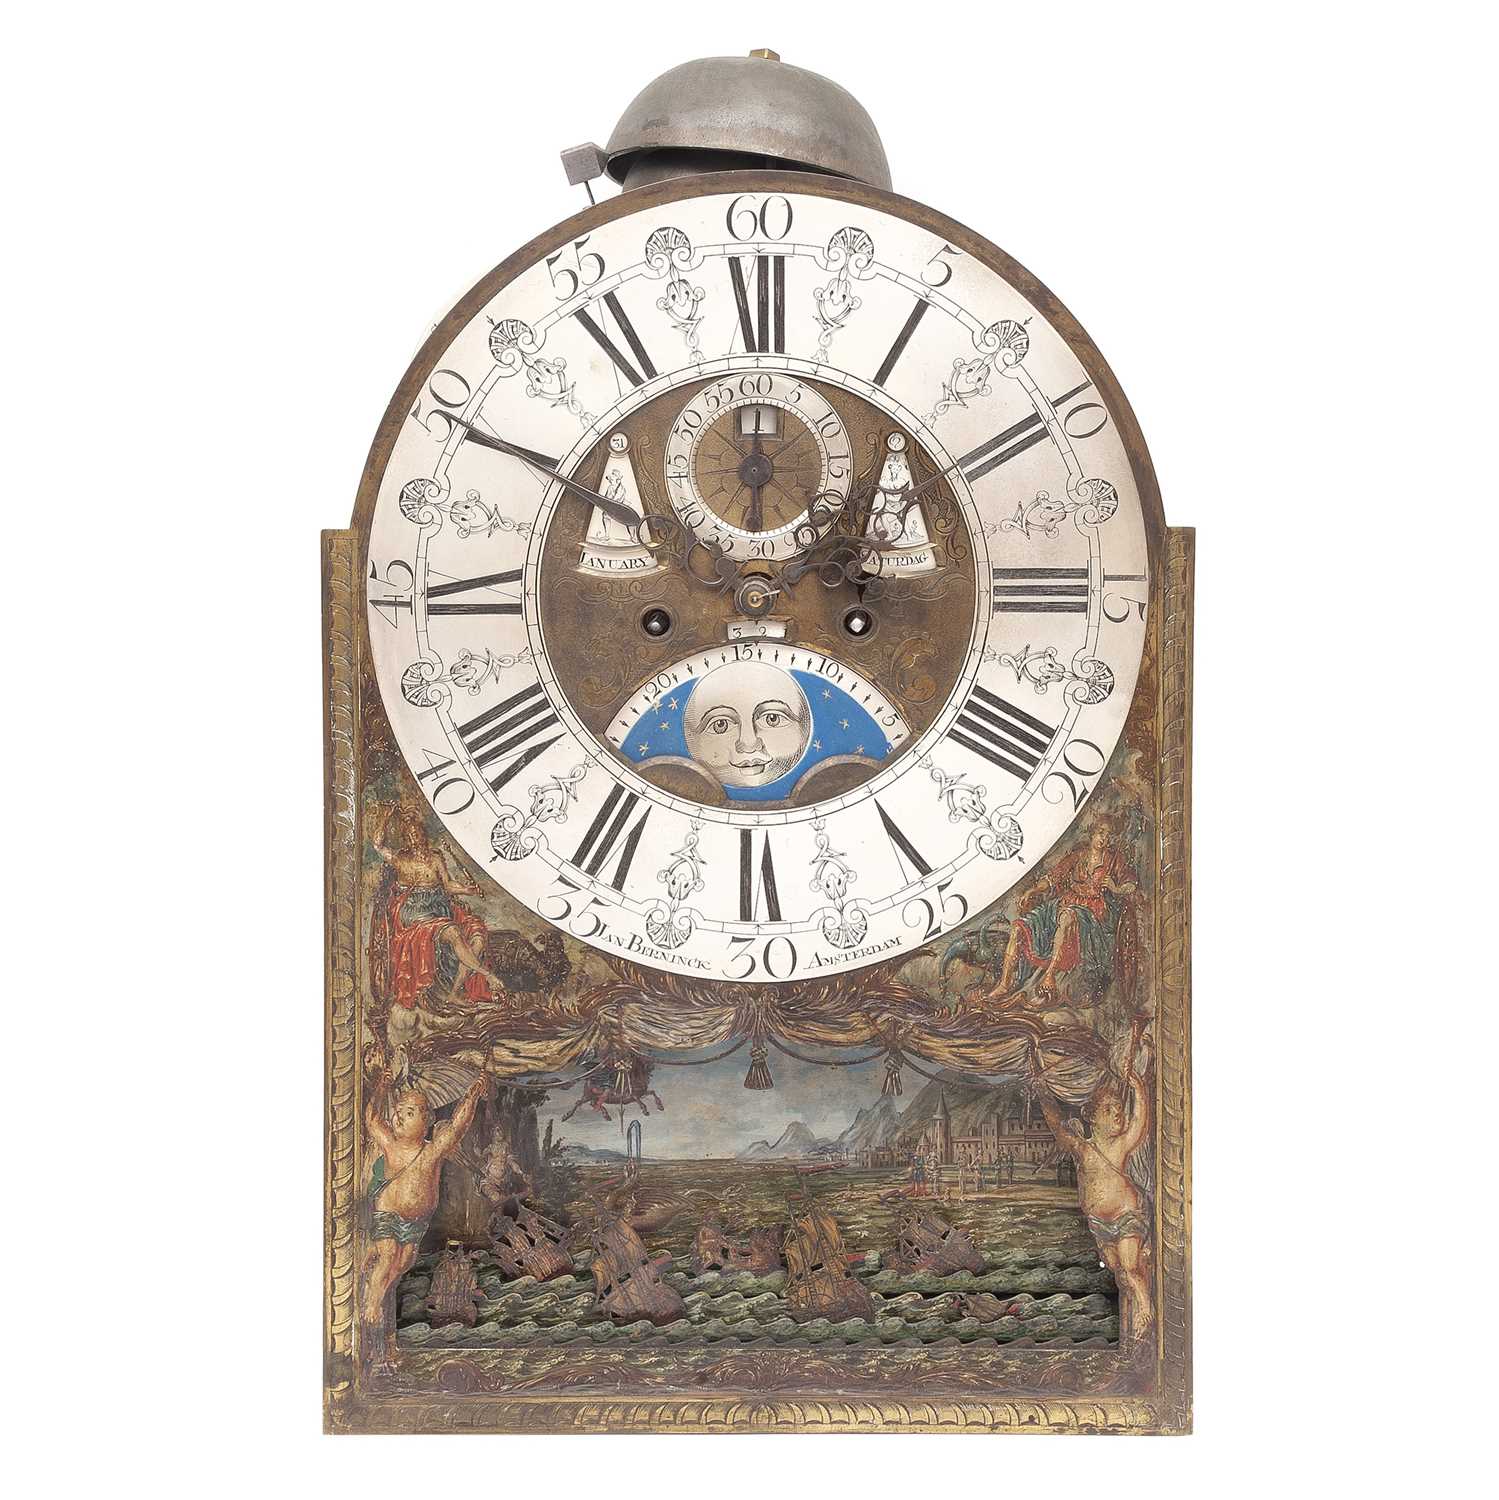 A RARE MID 18TH CENTURY DUTCH LONGCASE CLOCK WITH AUTOMATON AND CALENDAR - Image 2 of 9